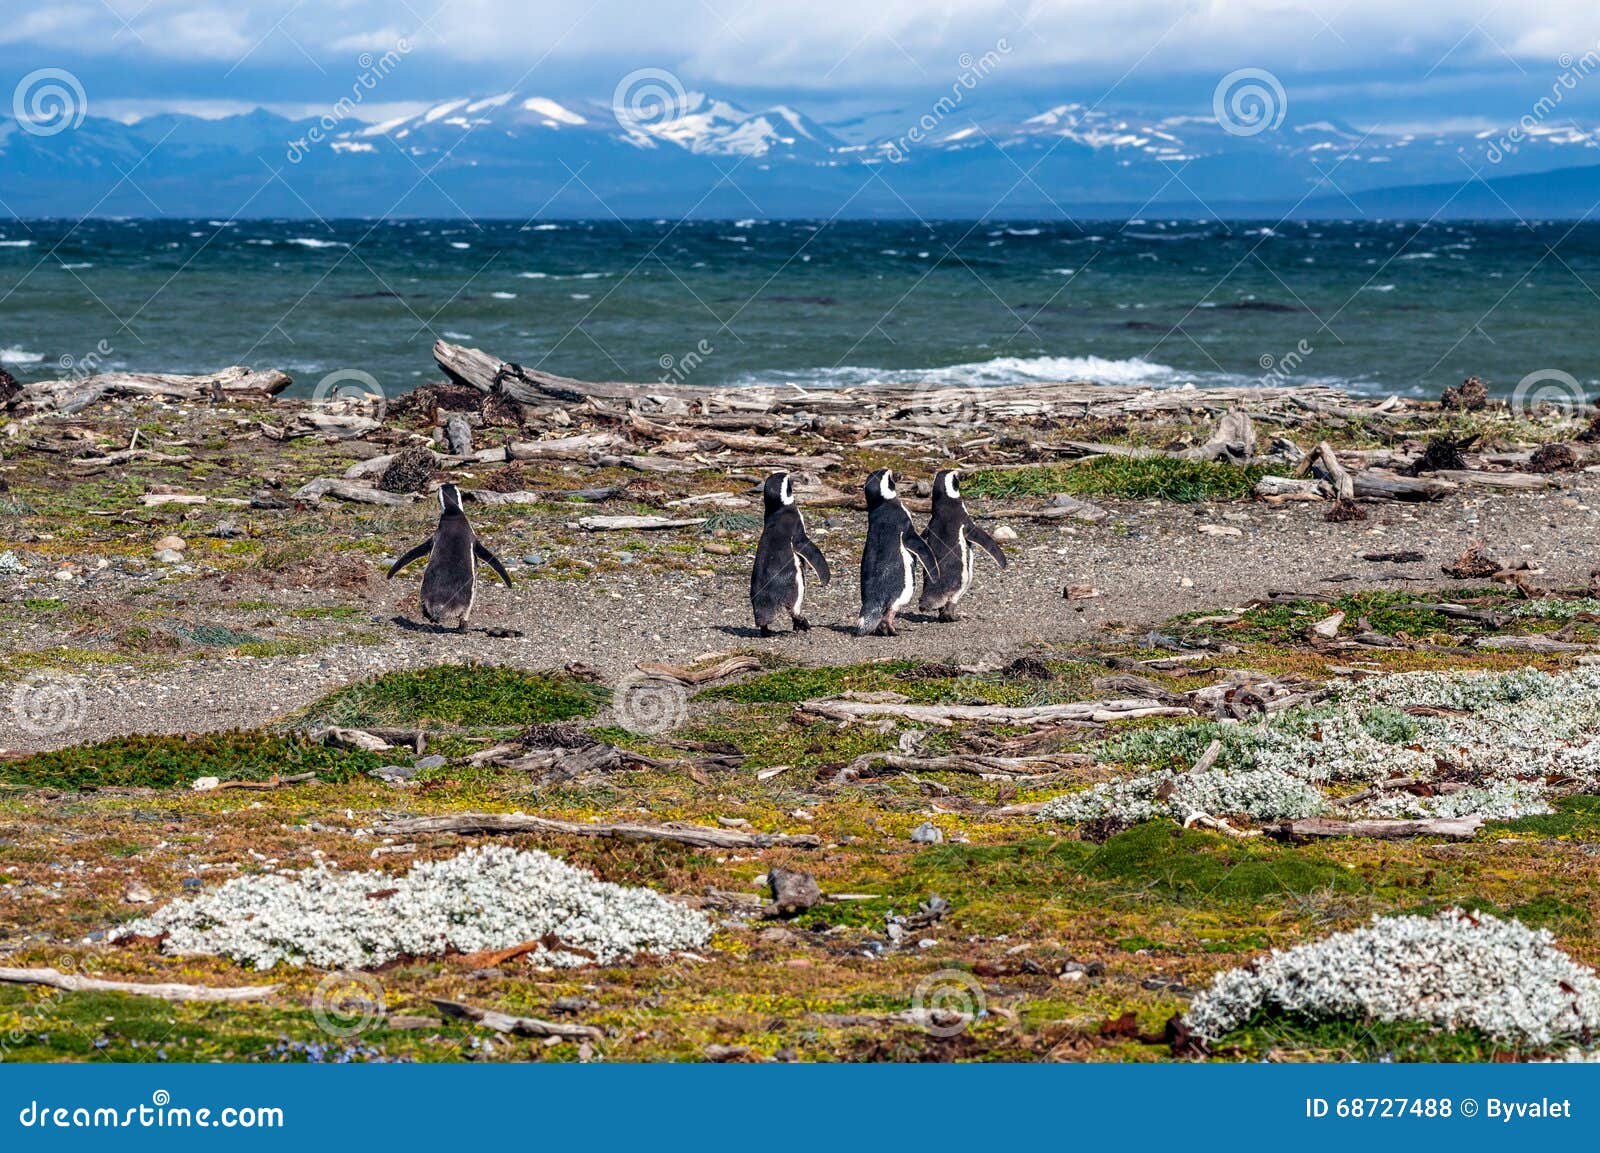 magellanic penguins in natural environment - seno otway penguin